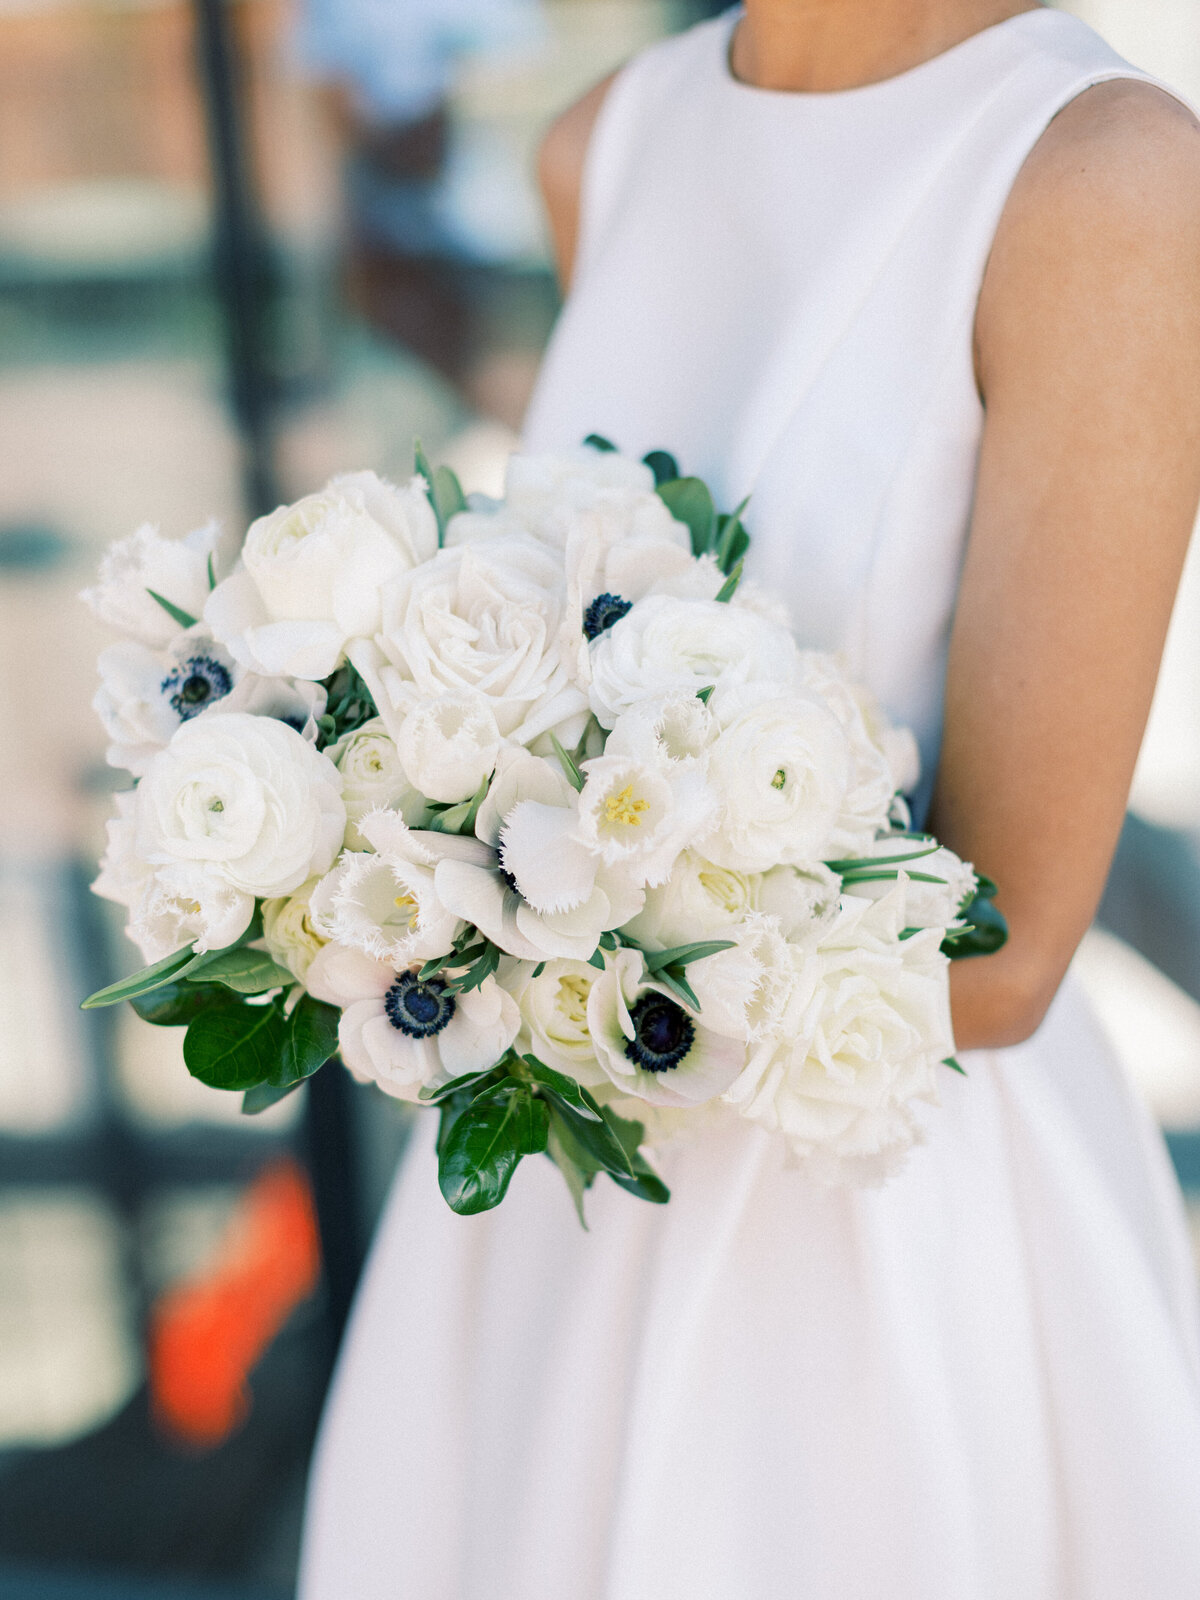 Prianka + Alex - American Wedding 8- Portraits Bride all white bouquet